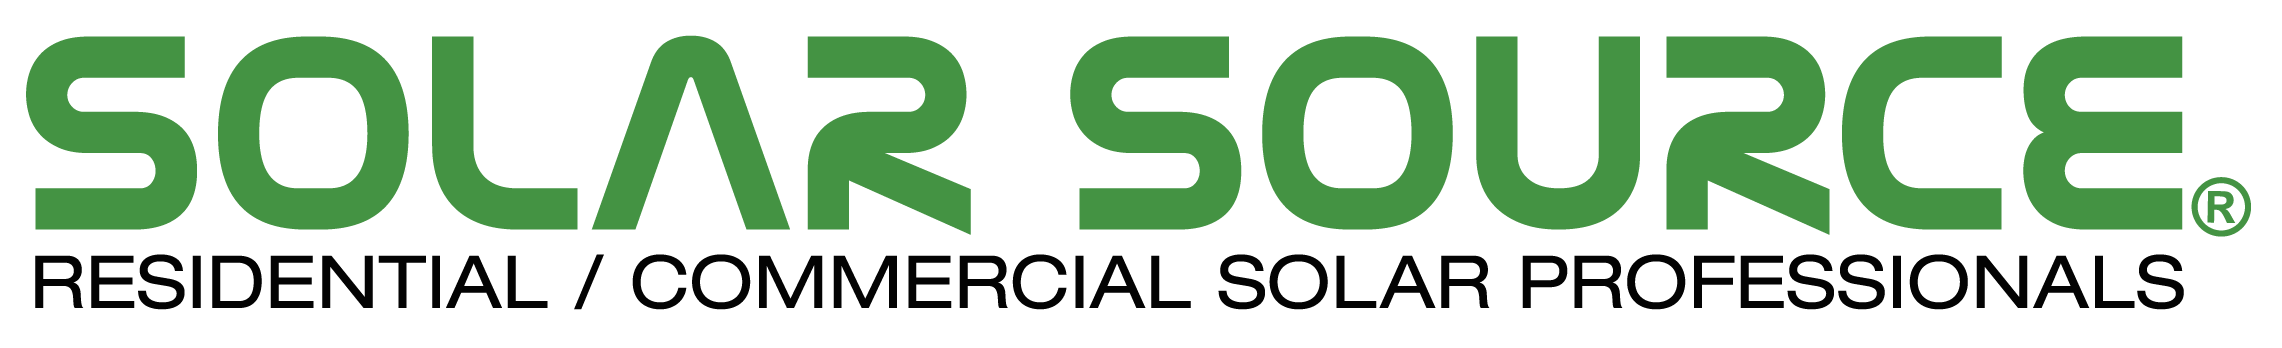 Solar Source, Inc. logo